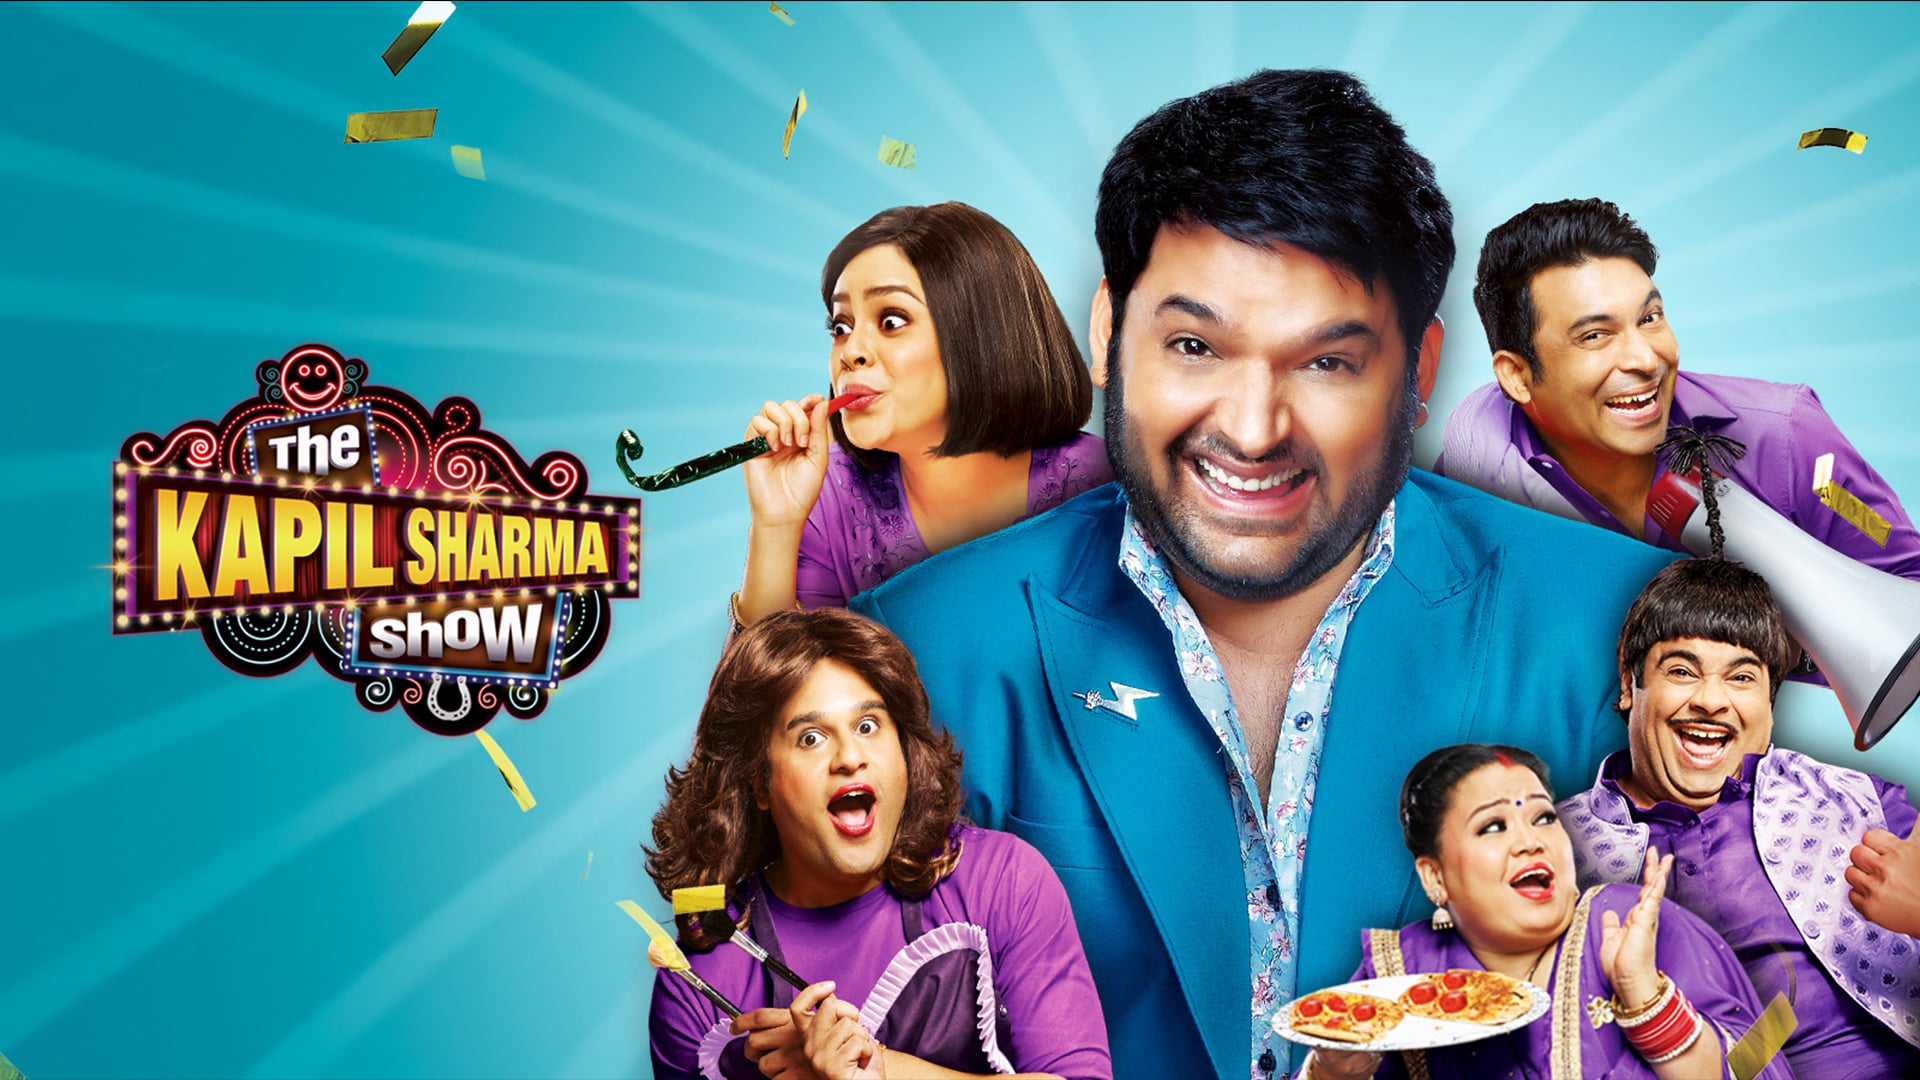 The Kapil Sharma Show - Season 2 Episode 32 : Star-Cast Of Kalank Can't Get Enough Of Kapil